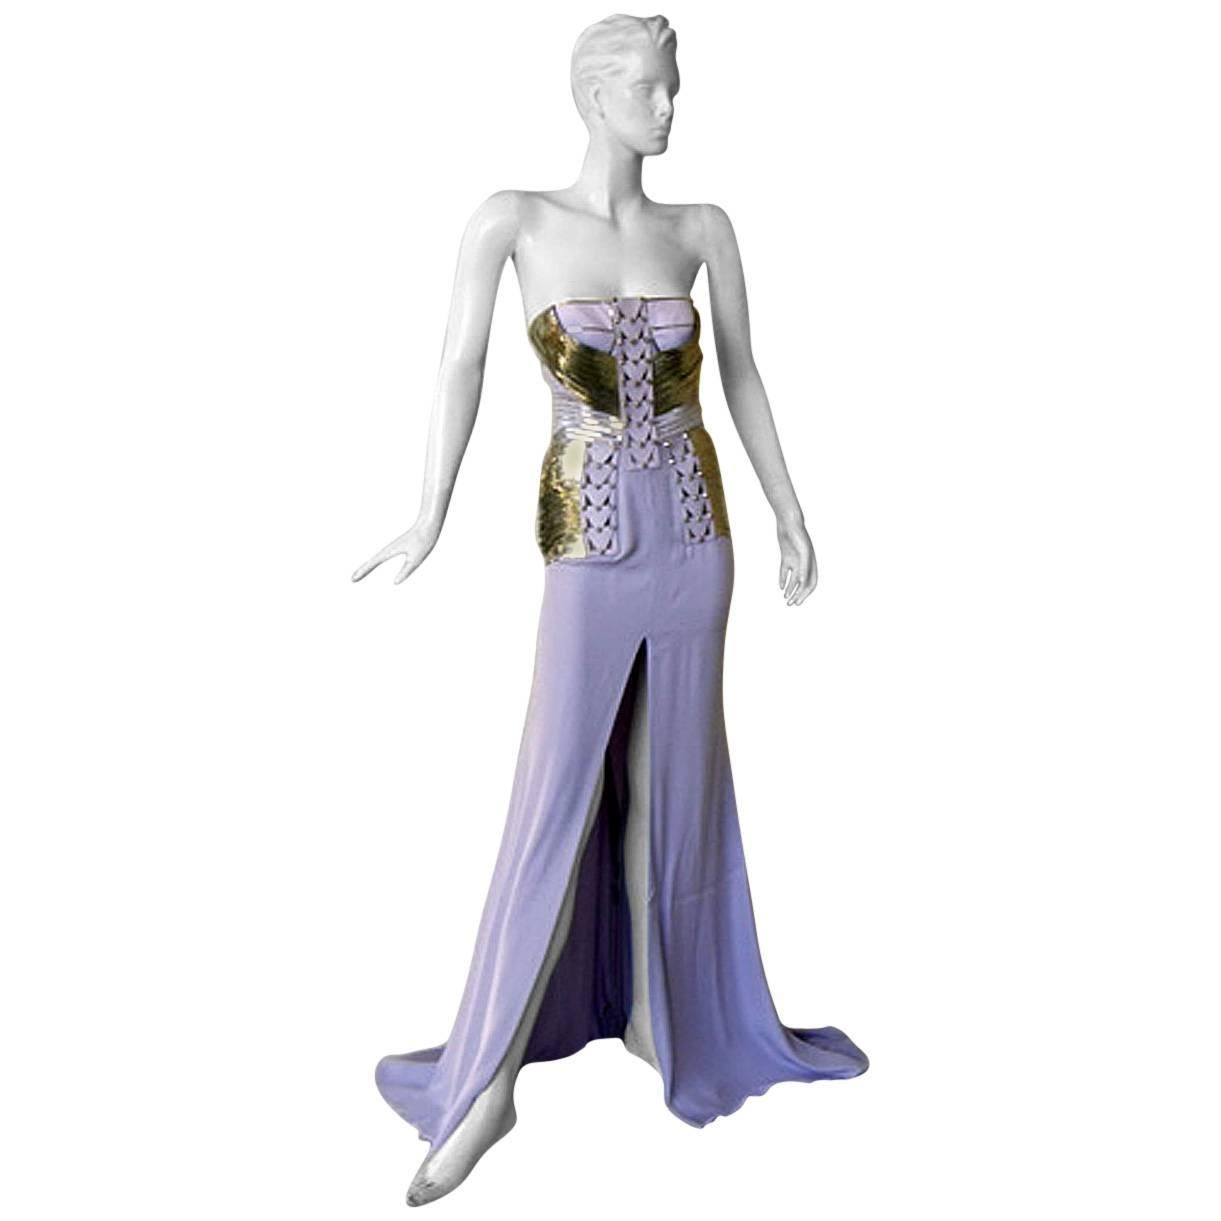  Versace "Alice in Wonderland" Silk Leather & Metal Runway Dress Gown   New!